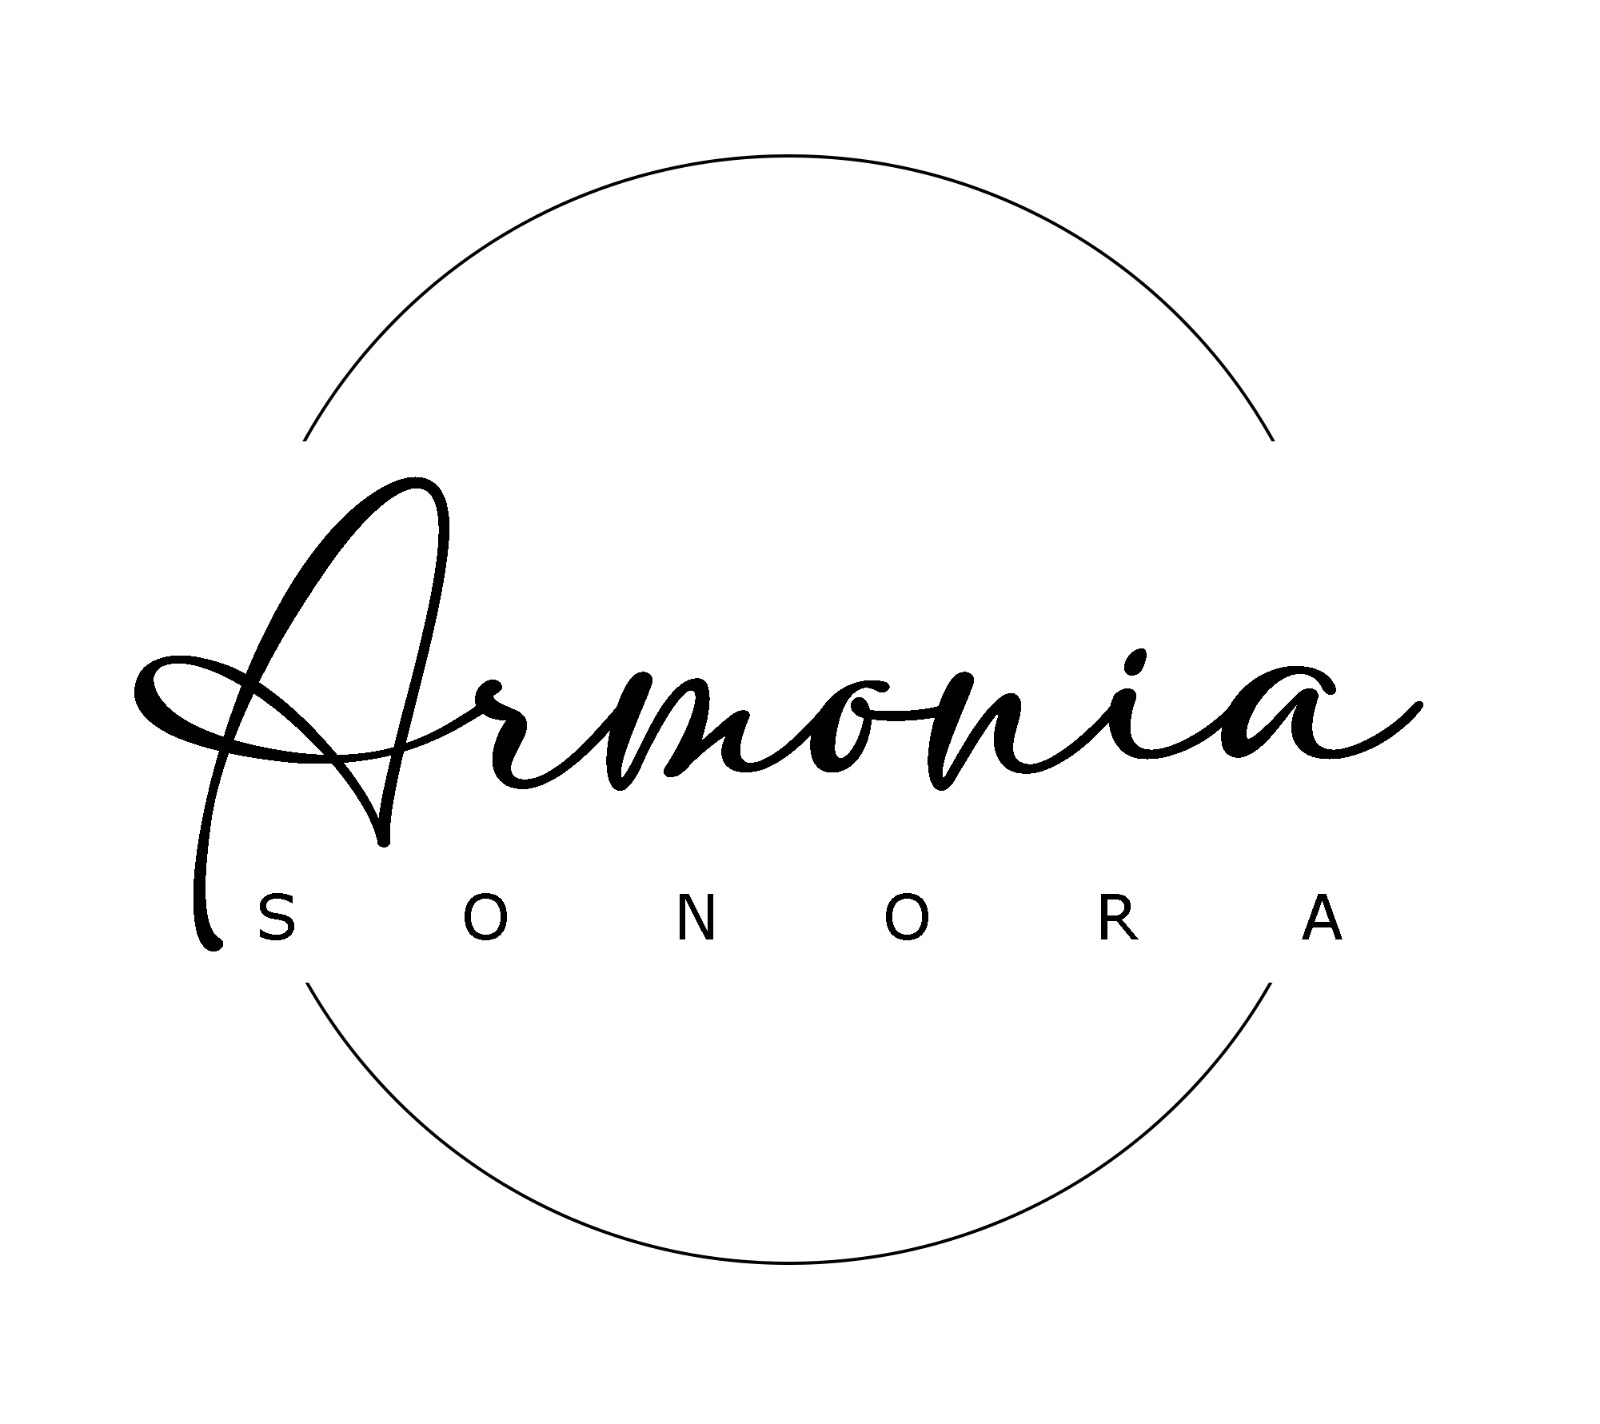 Armonia Sonora